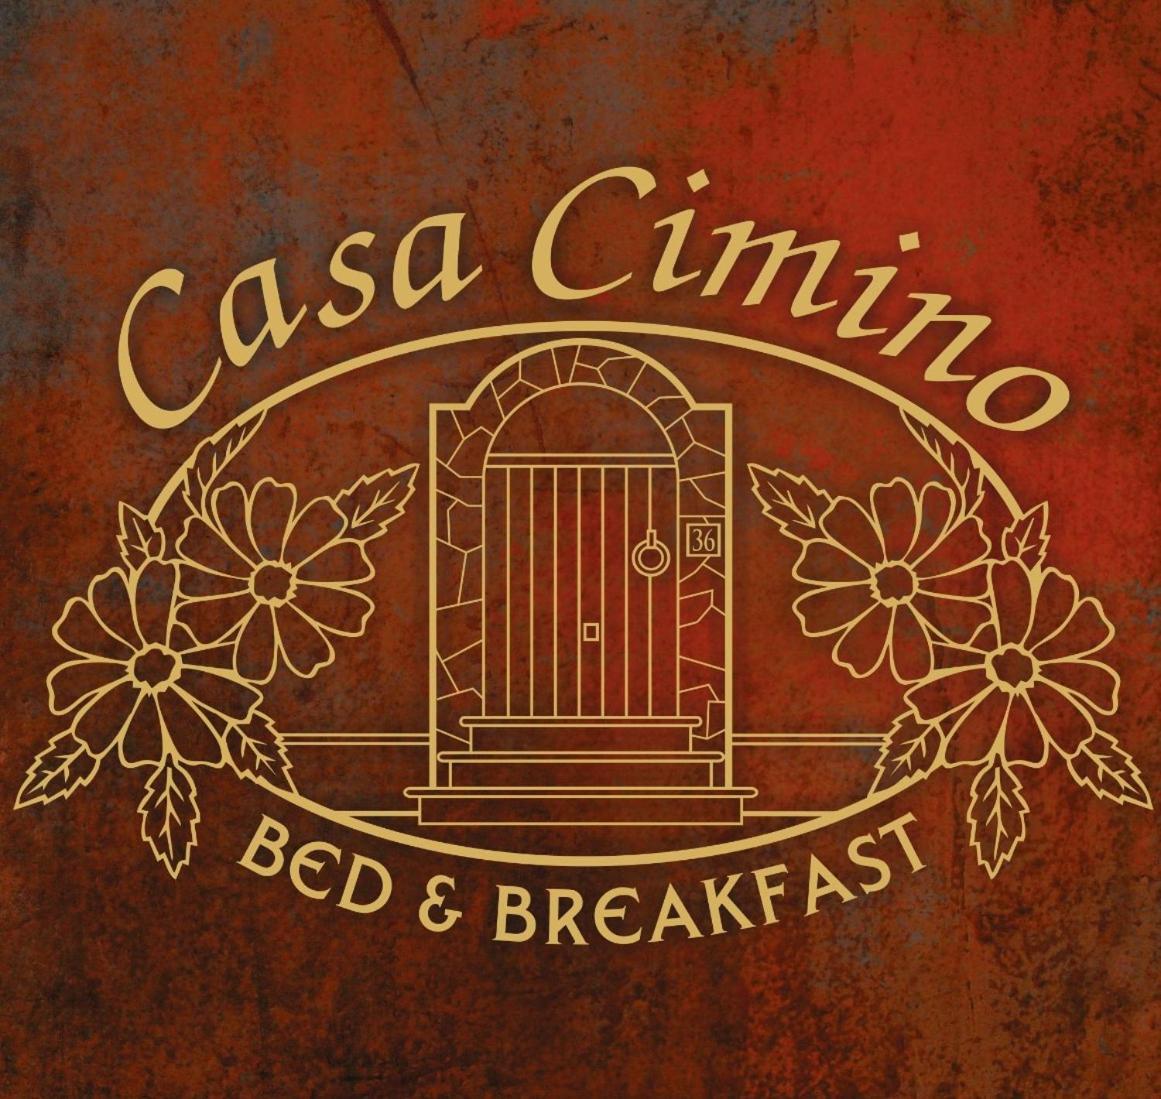 Foto - B&B Casa Cimino - Monopoli - Puglia